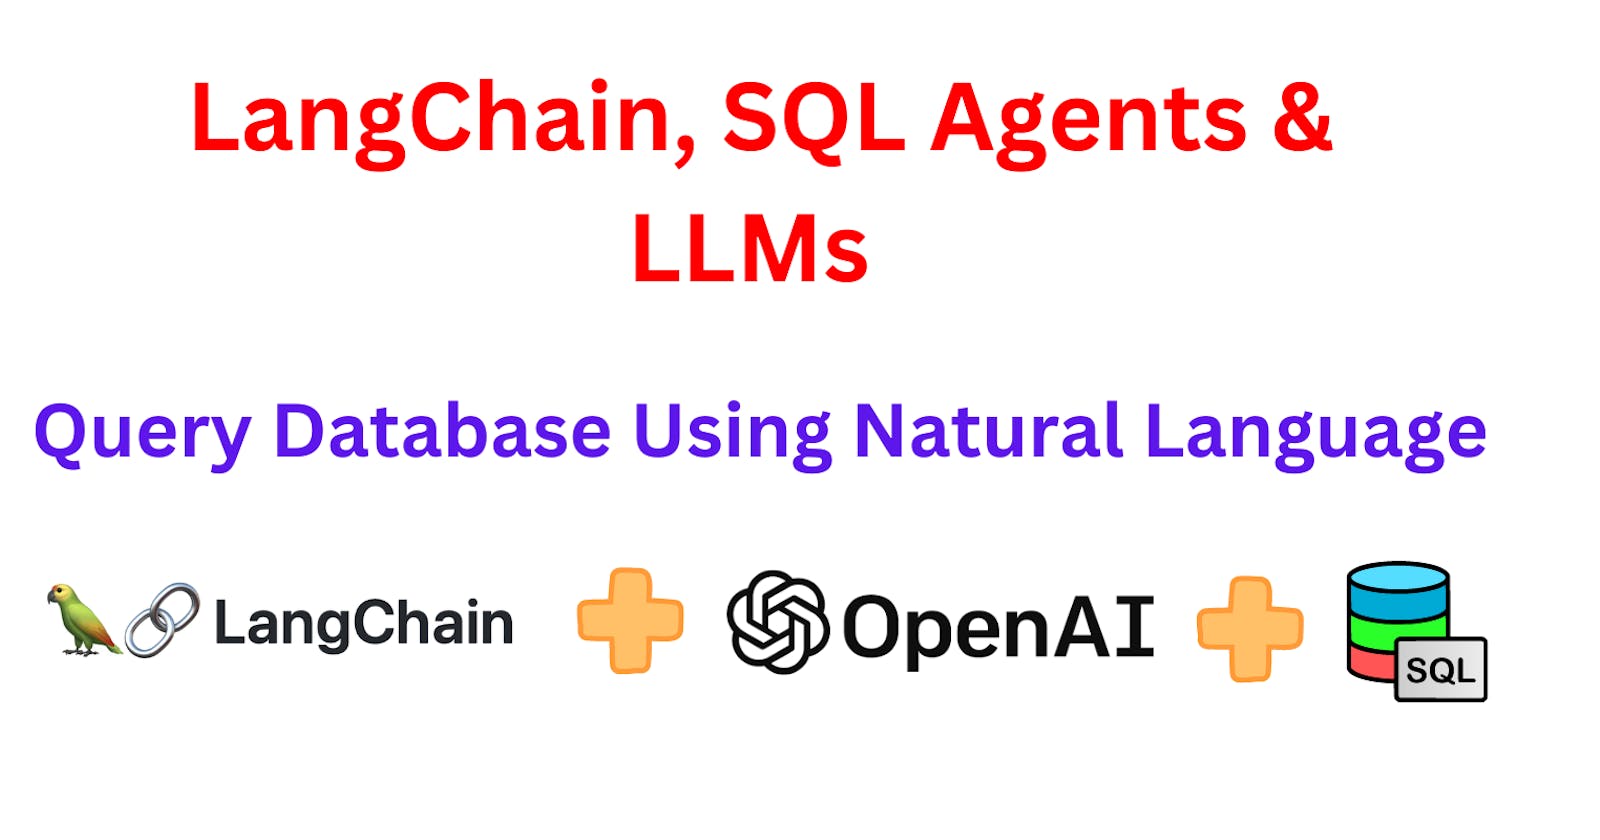 LangChain, SQL Agents & OpenAI LLMs: Query Database Using Natural Language